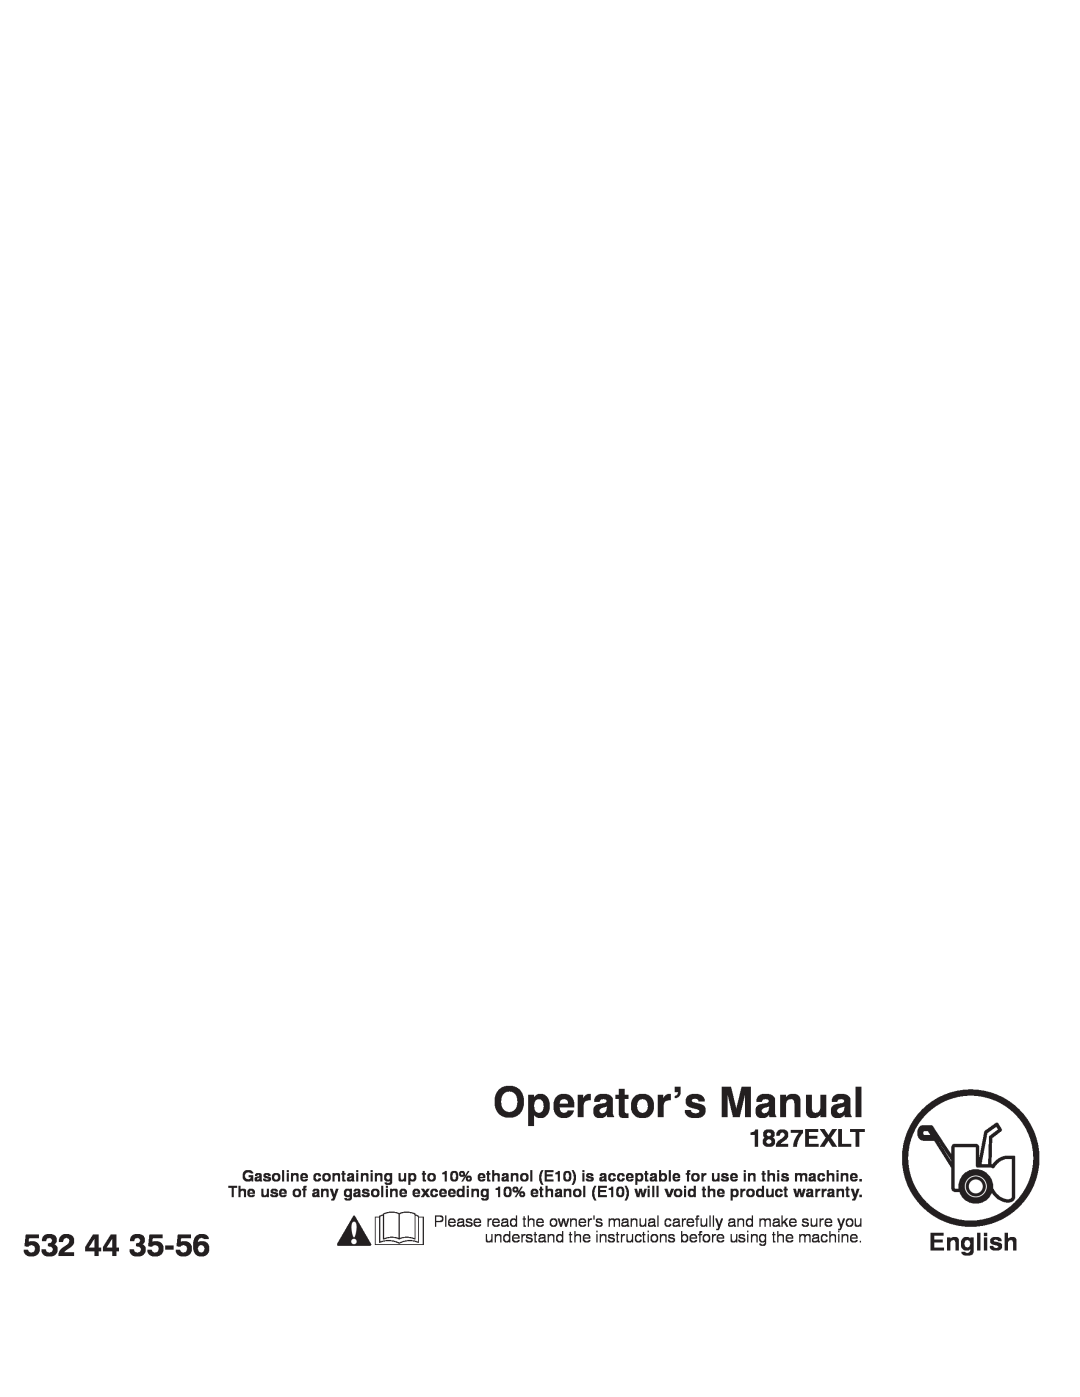 Husqvarna 1827EXLT warranty Operator’s Manual, English, 532 